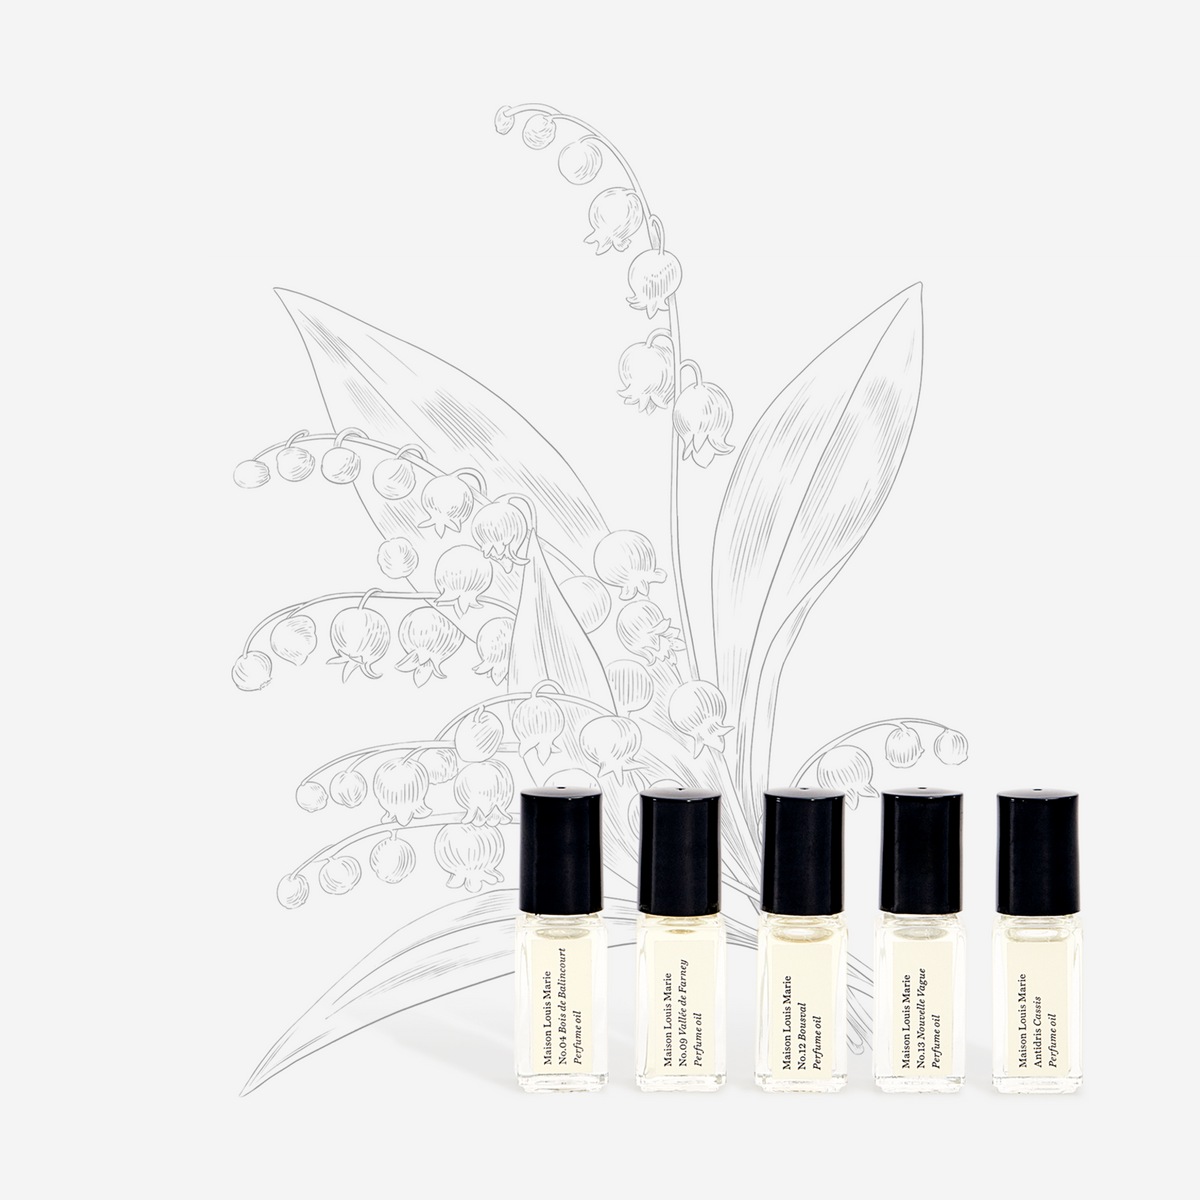 Perfume Oil Discovery Kit